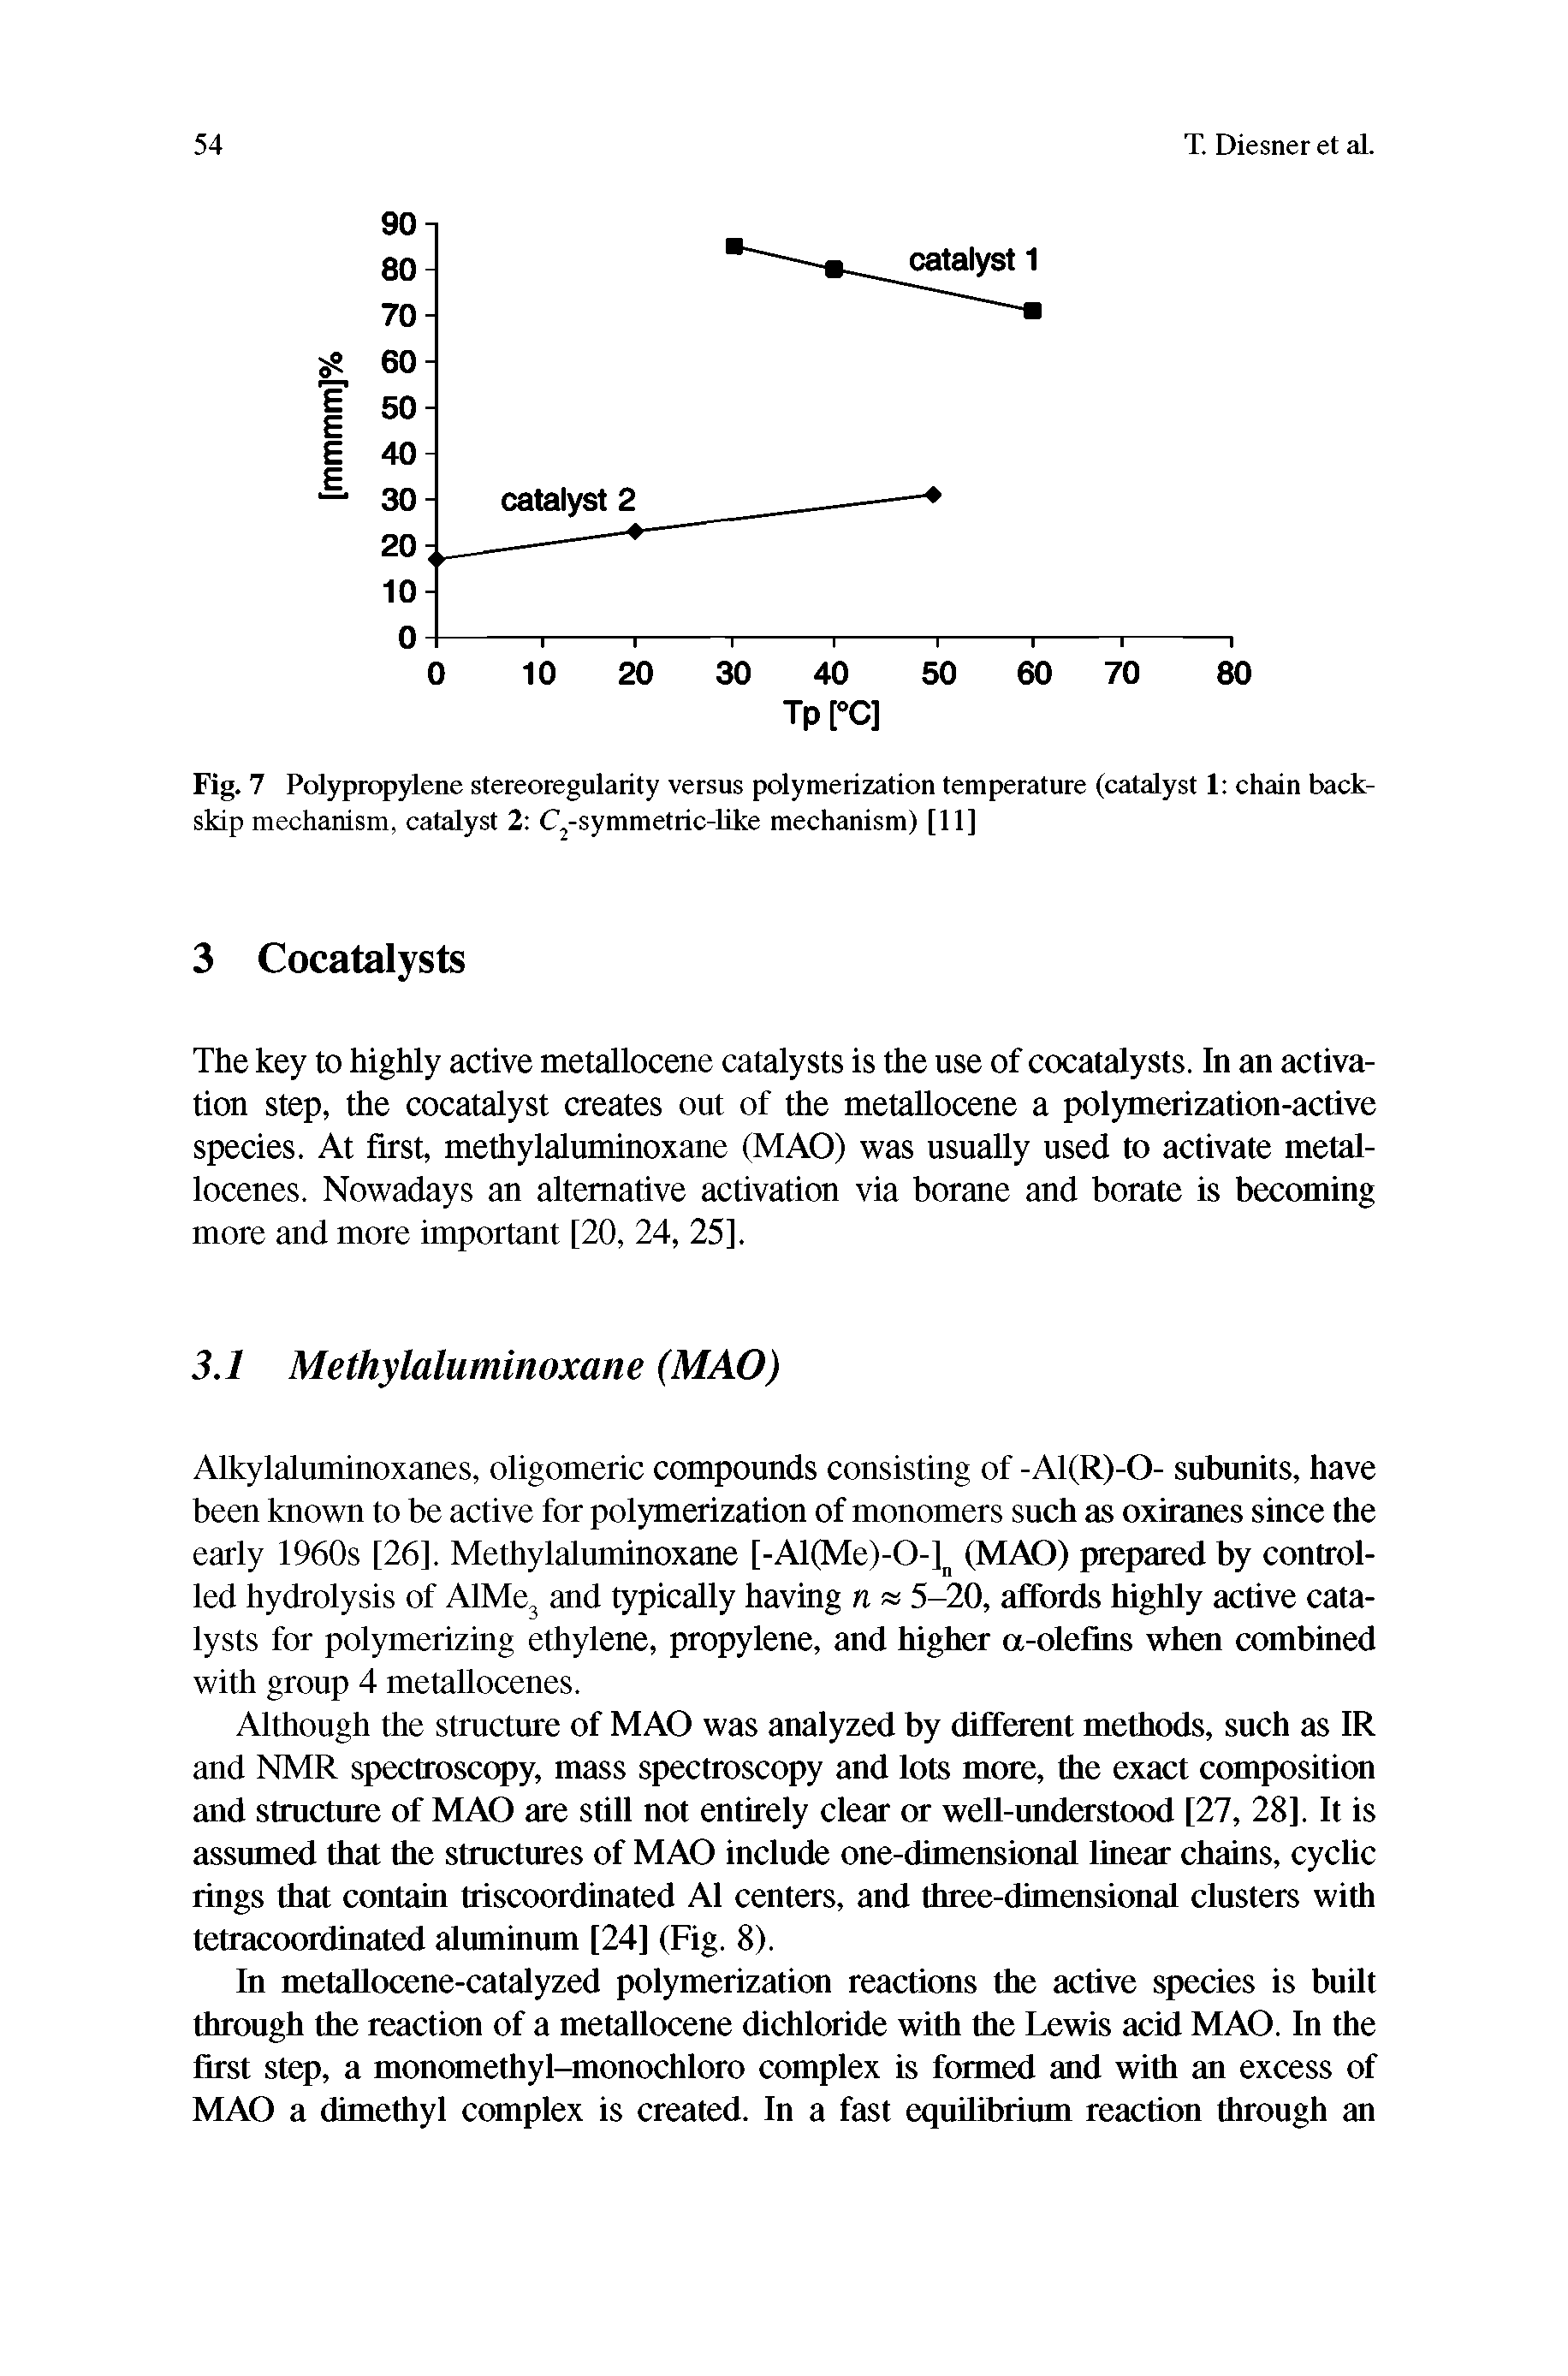 Fig. 7 Polypropylene stereoregularity versus polymerization temperature (catalyst 1 chain back-skip mechanism, catalyst 2 C2-symmetric-like mechanism) [11]...